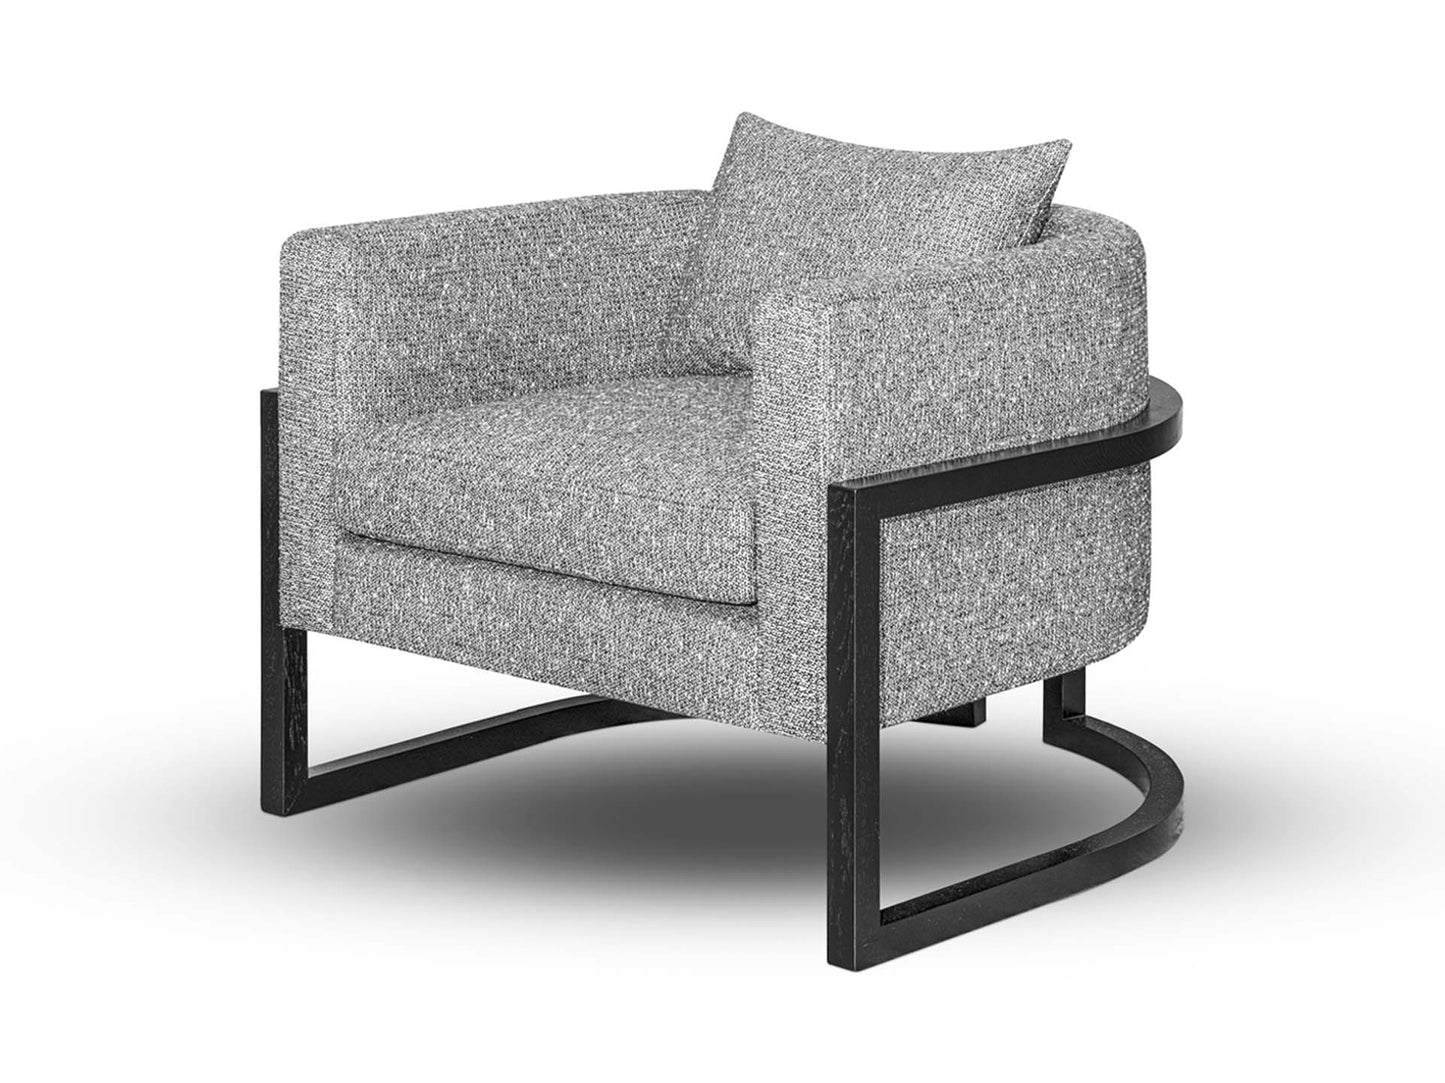 JULIUS I Lounge chair by Duistt